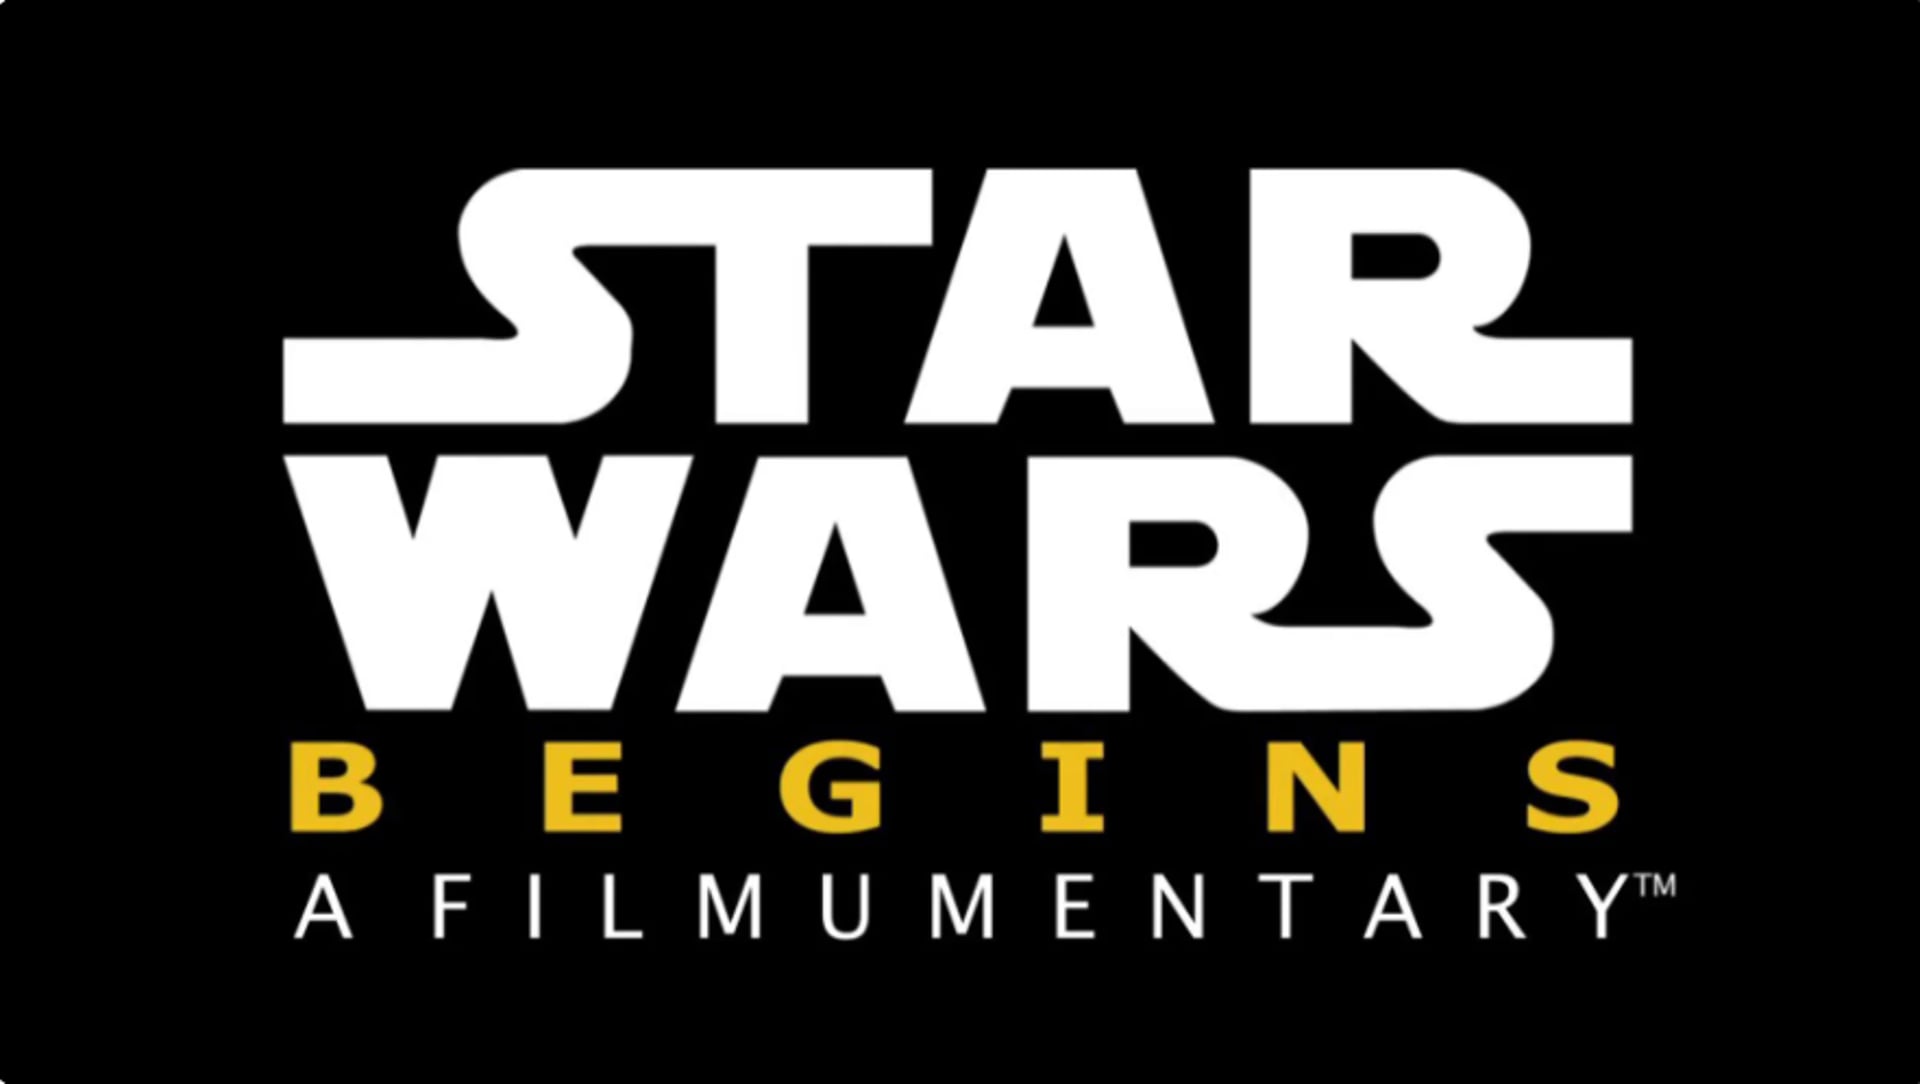 Star Wars Begins – A Star Wars Filmumentary